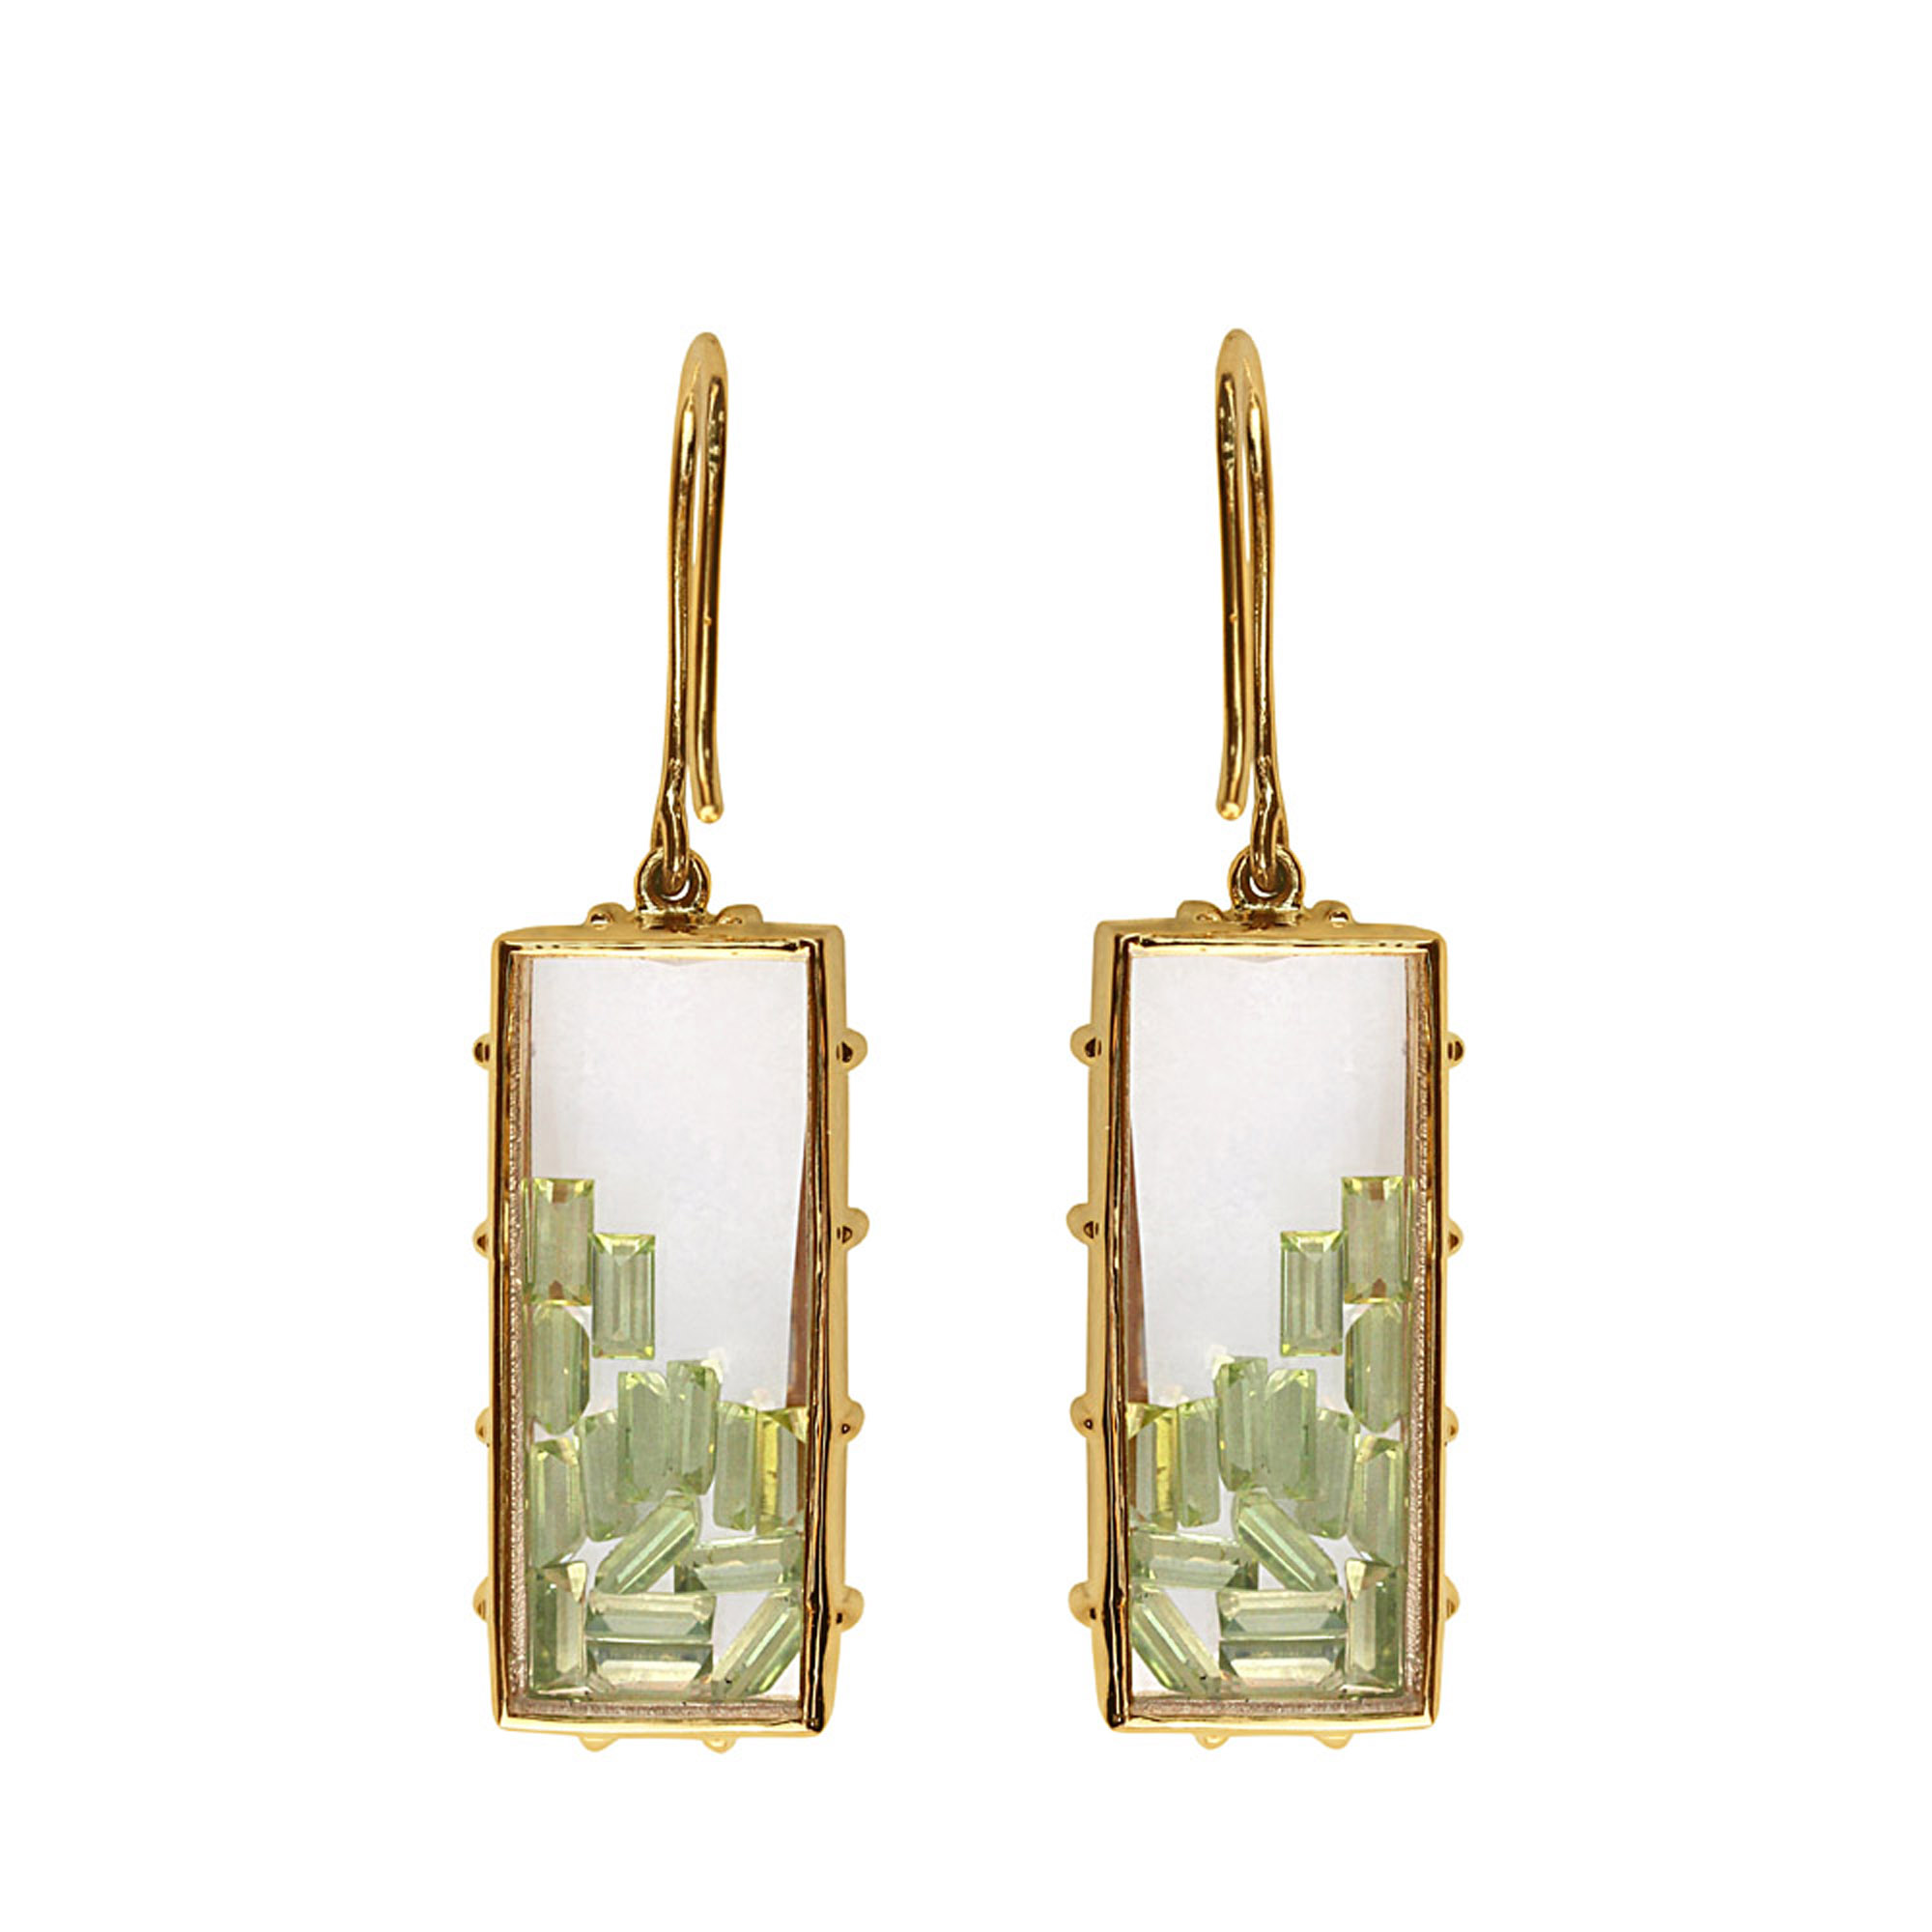 Solid 18k gold crystal quartz shaker hook earrings